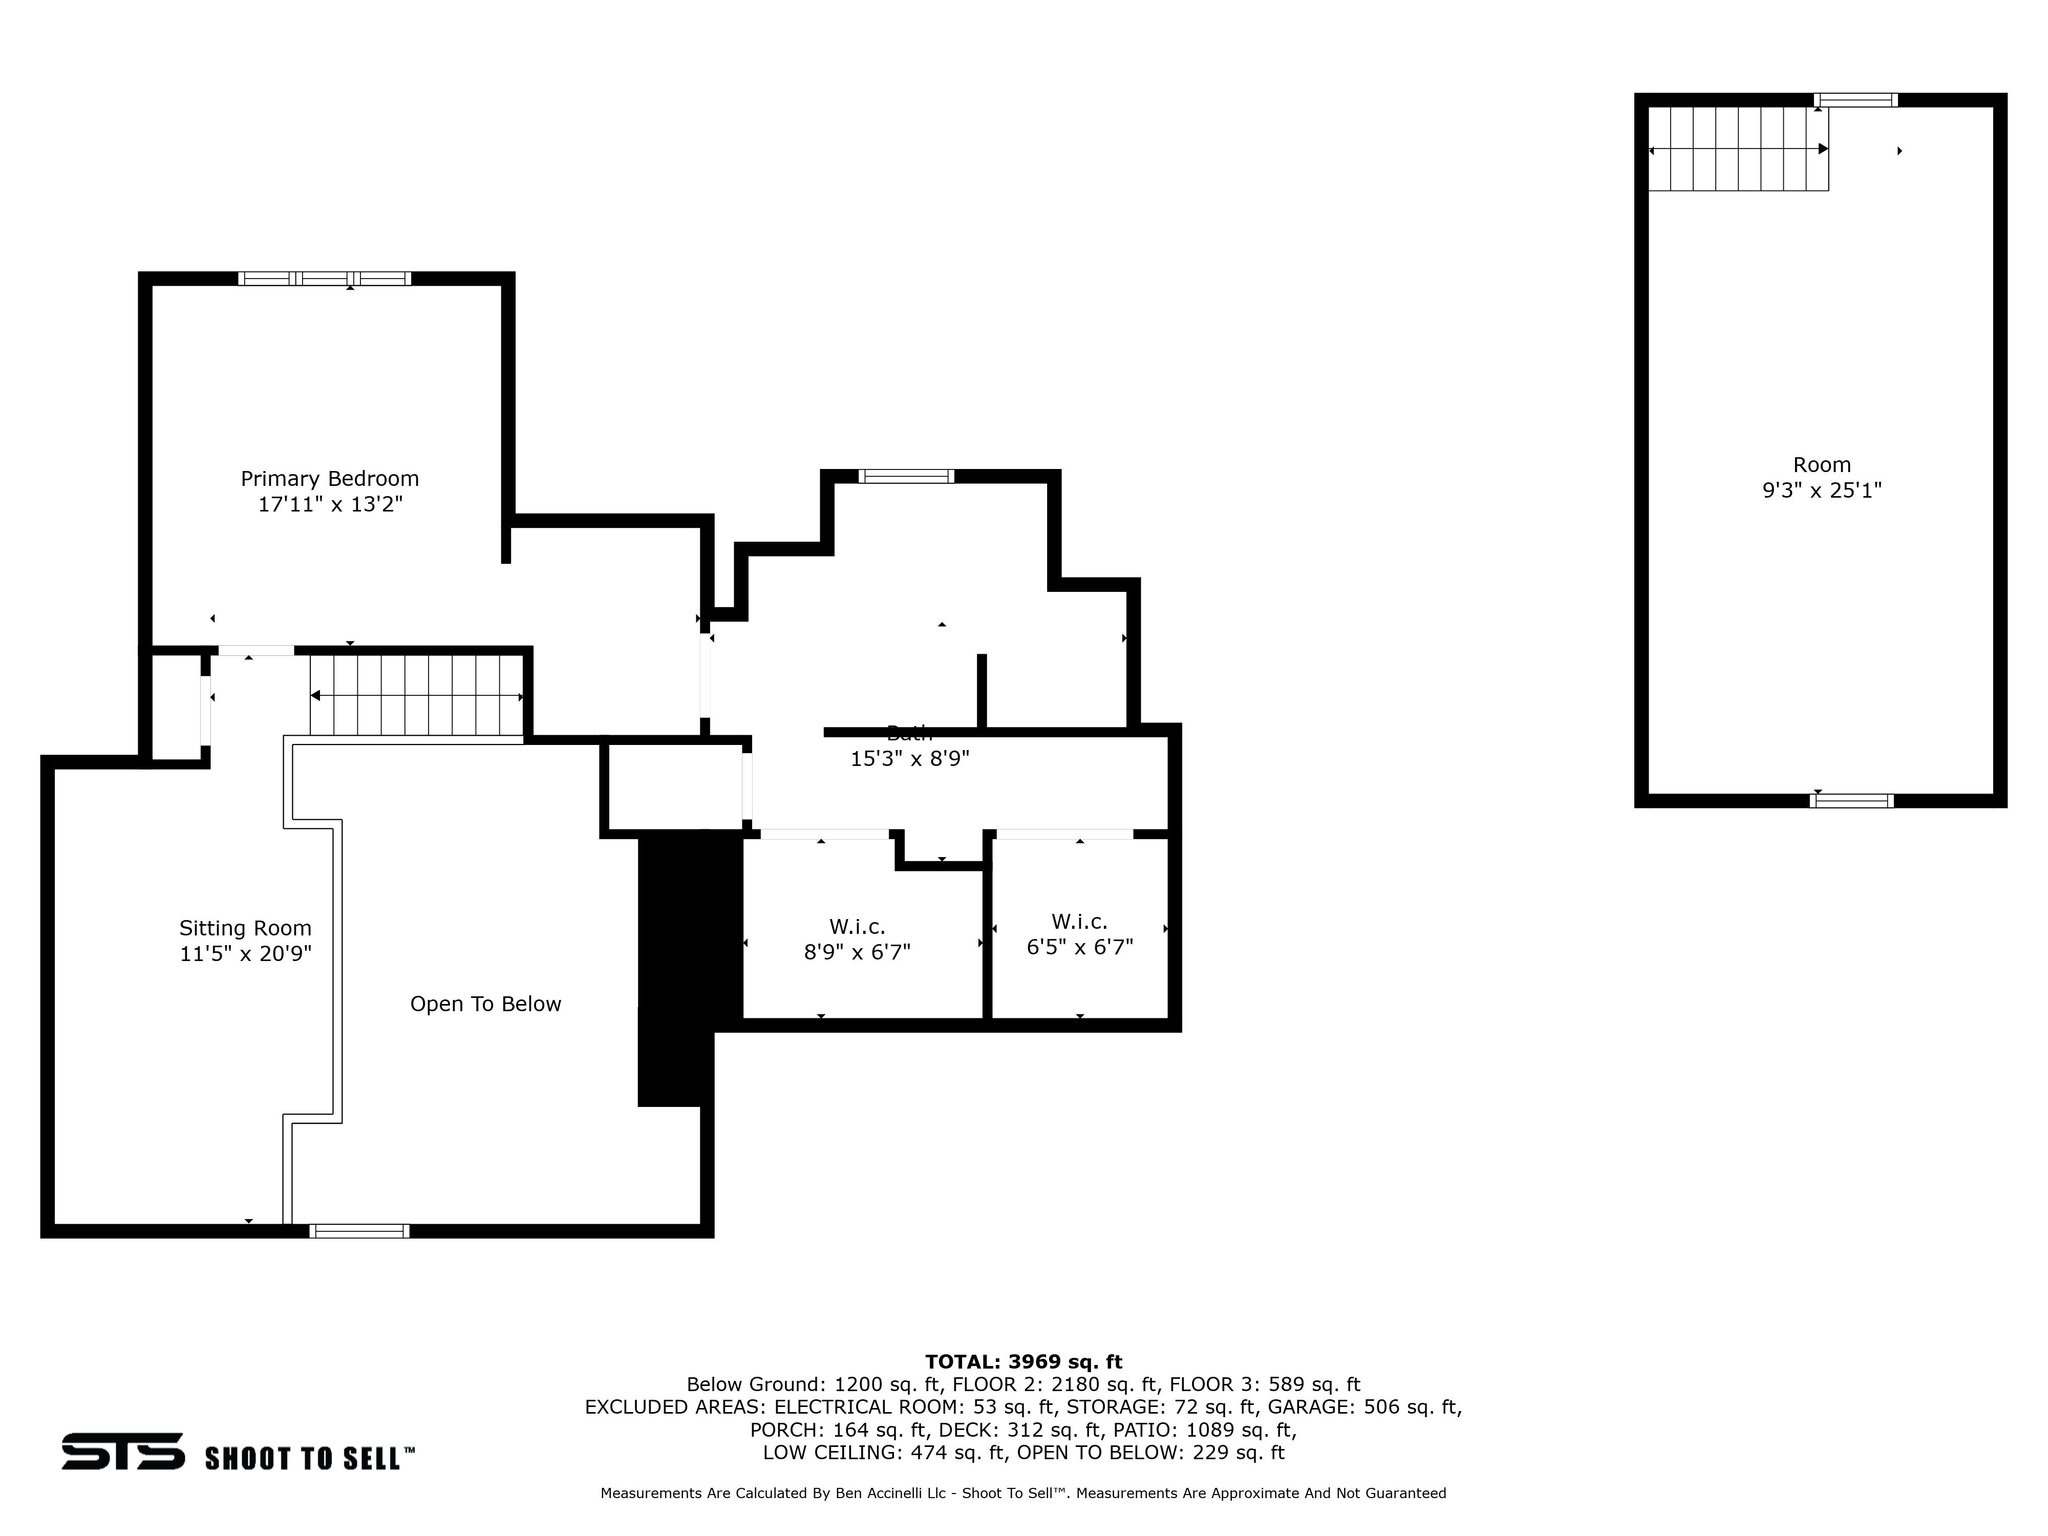 Floor plan of second floor plus bonus rec or family room above the garage.